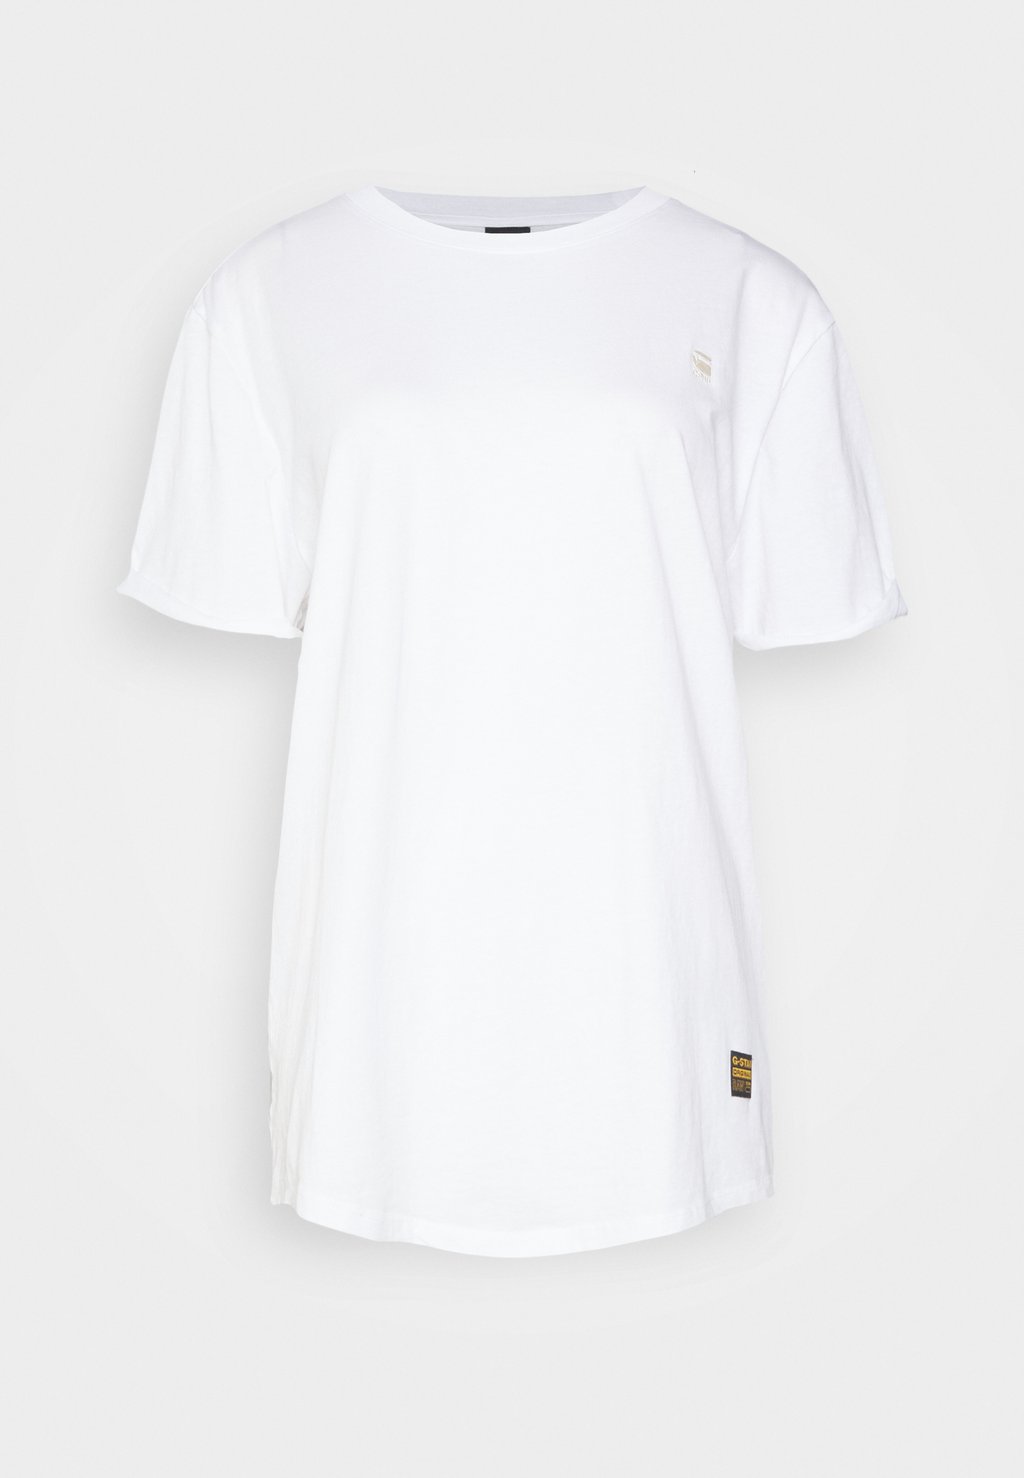 Базовая футболка G-Star, белый футболка базовая g star цвет combat